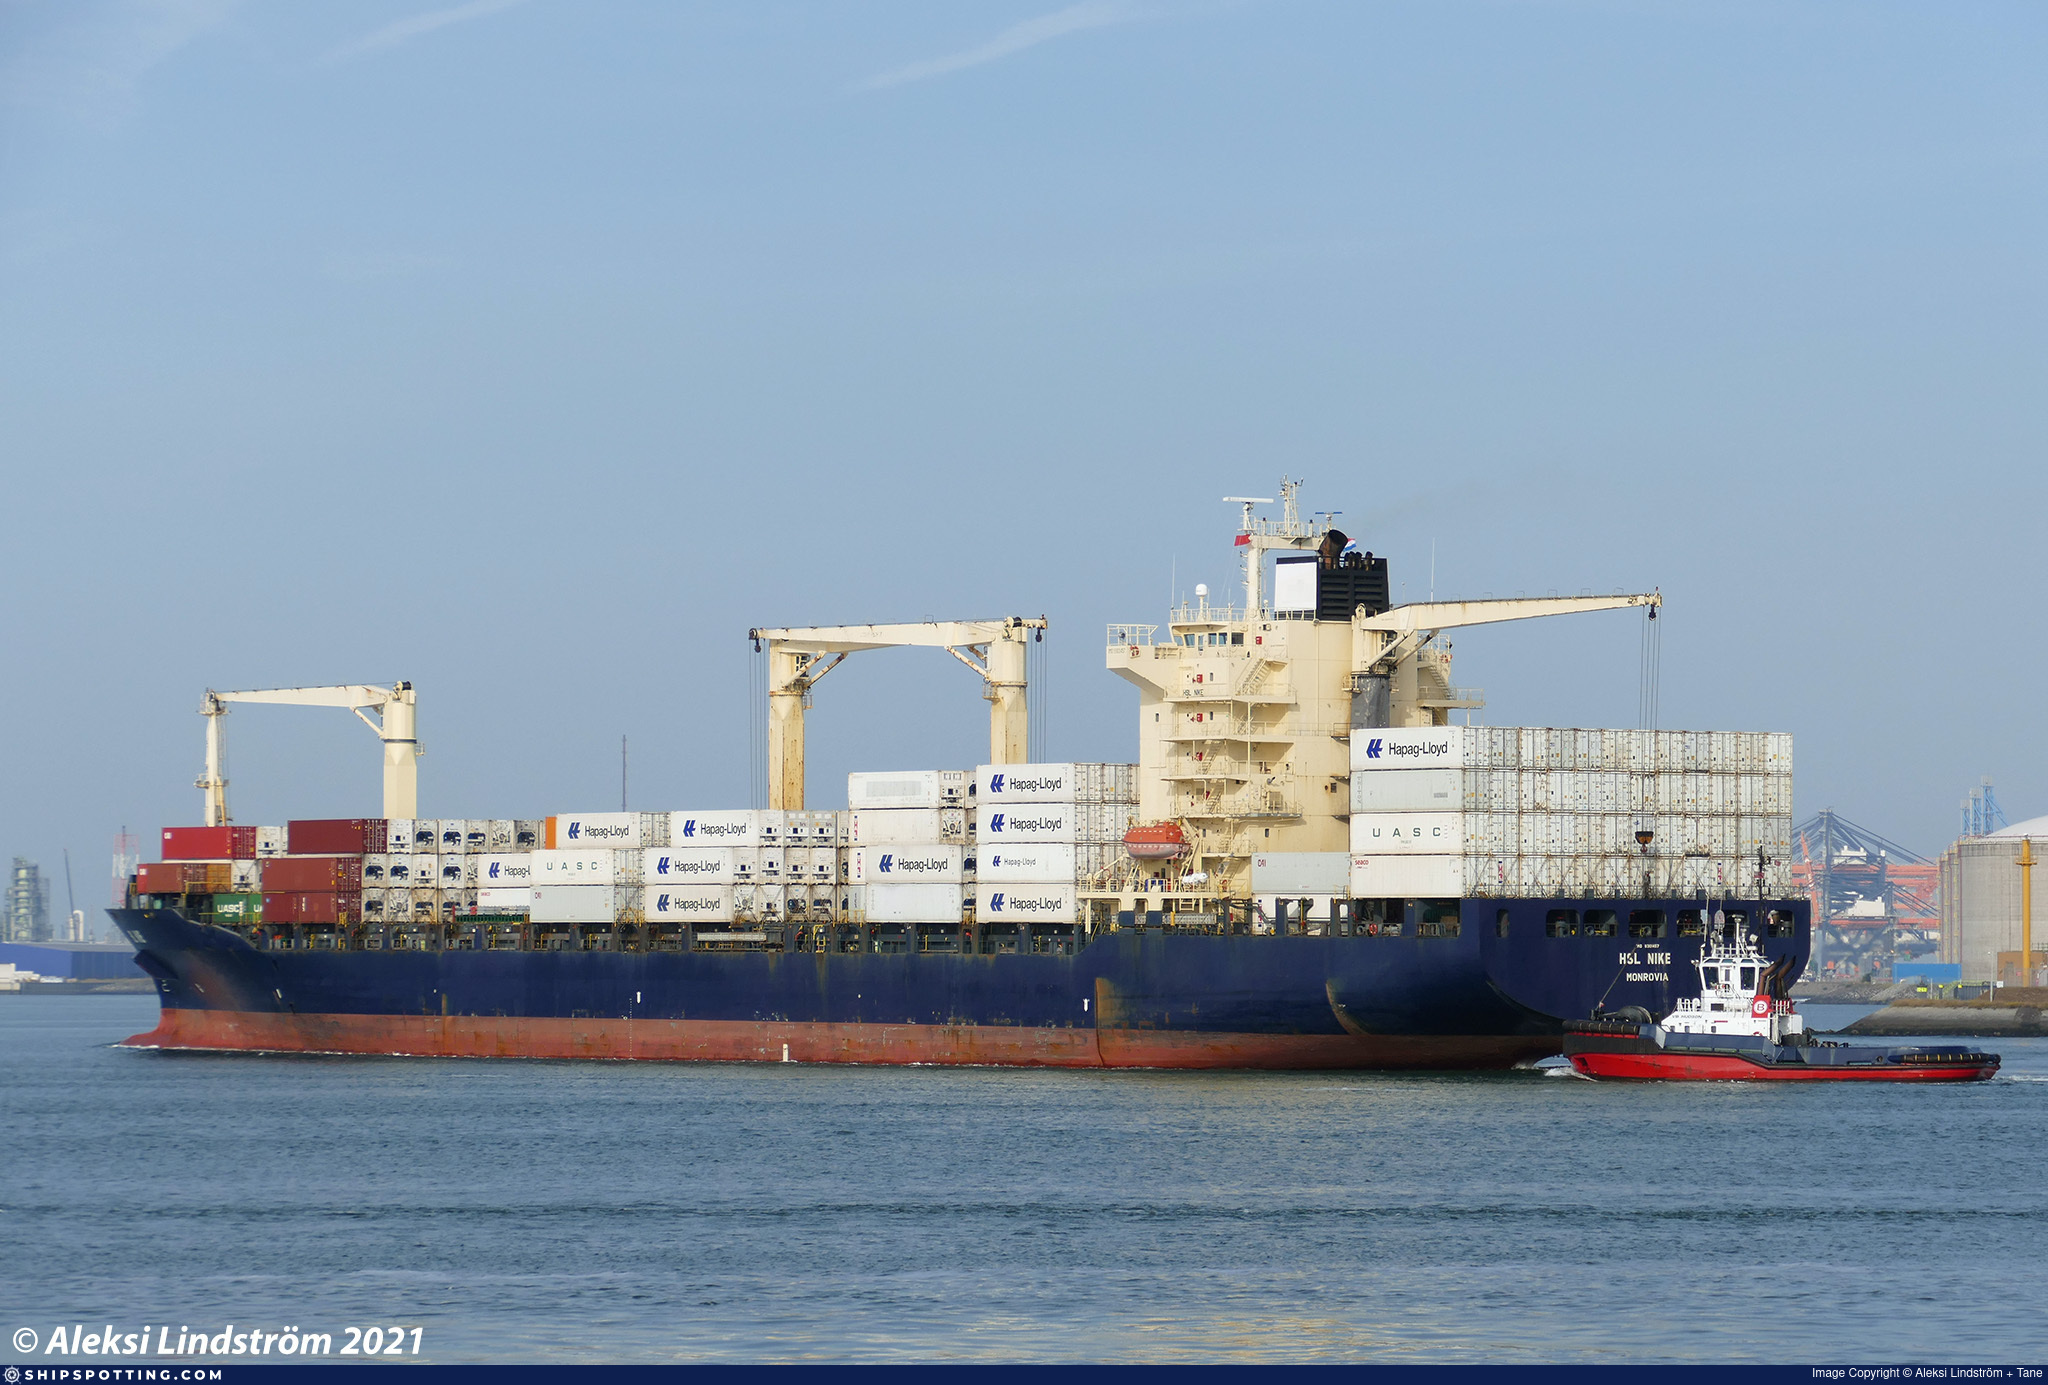 HSL NIKE - IMO - Ship Photos, Information, Videos and Ship Tracker